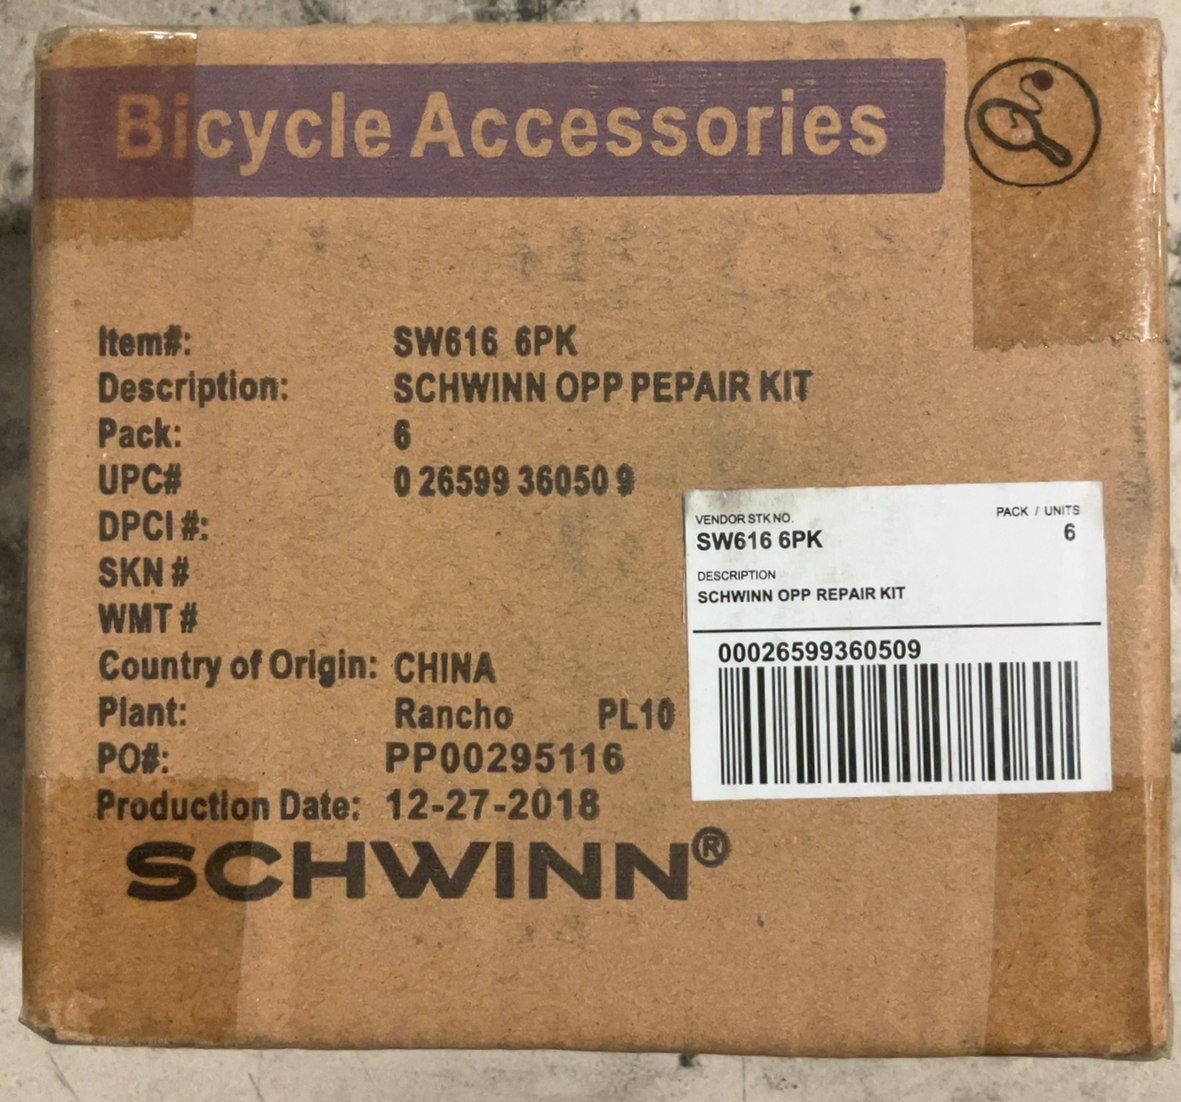 Schwinn Bike Tire Repair Kit, Quick Bike Tire Repair, Wheel Patch, Bicycle Accessories Glueless Patch Repair